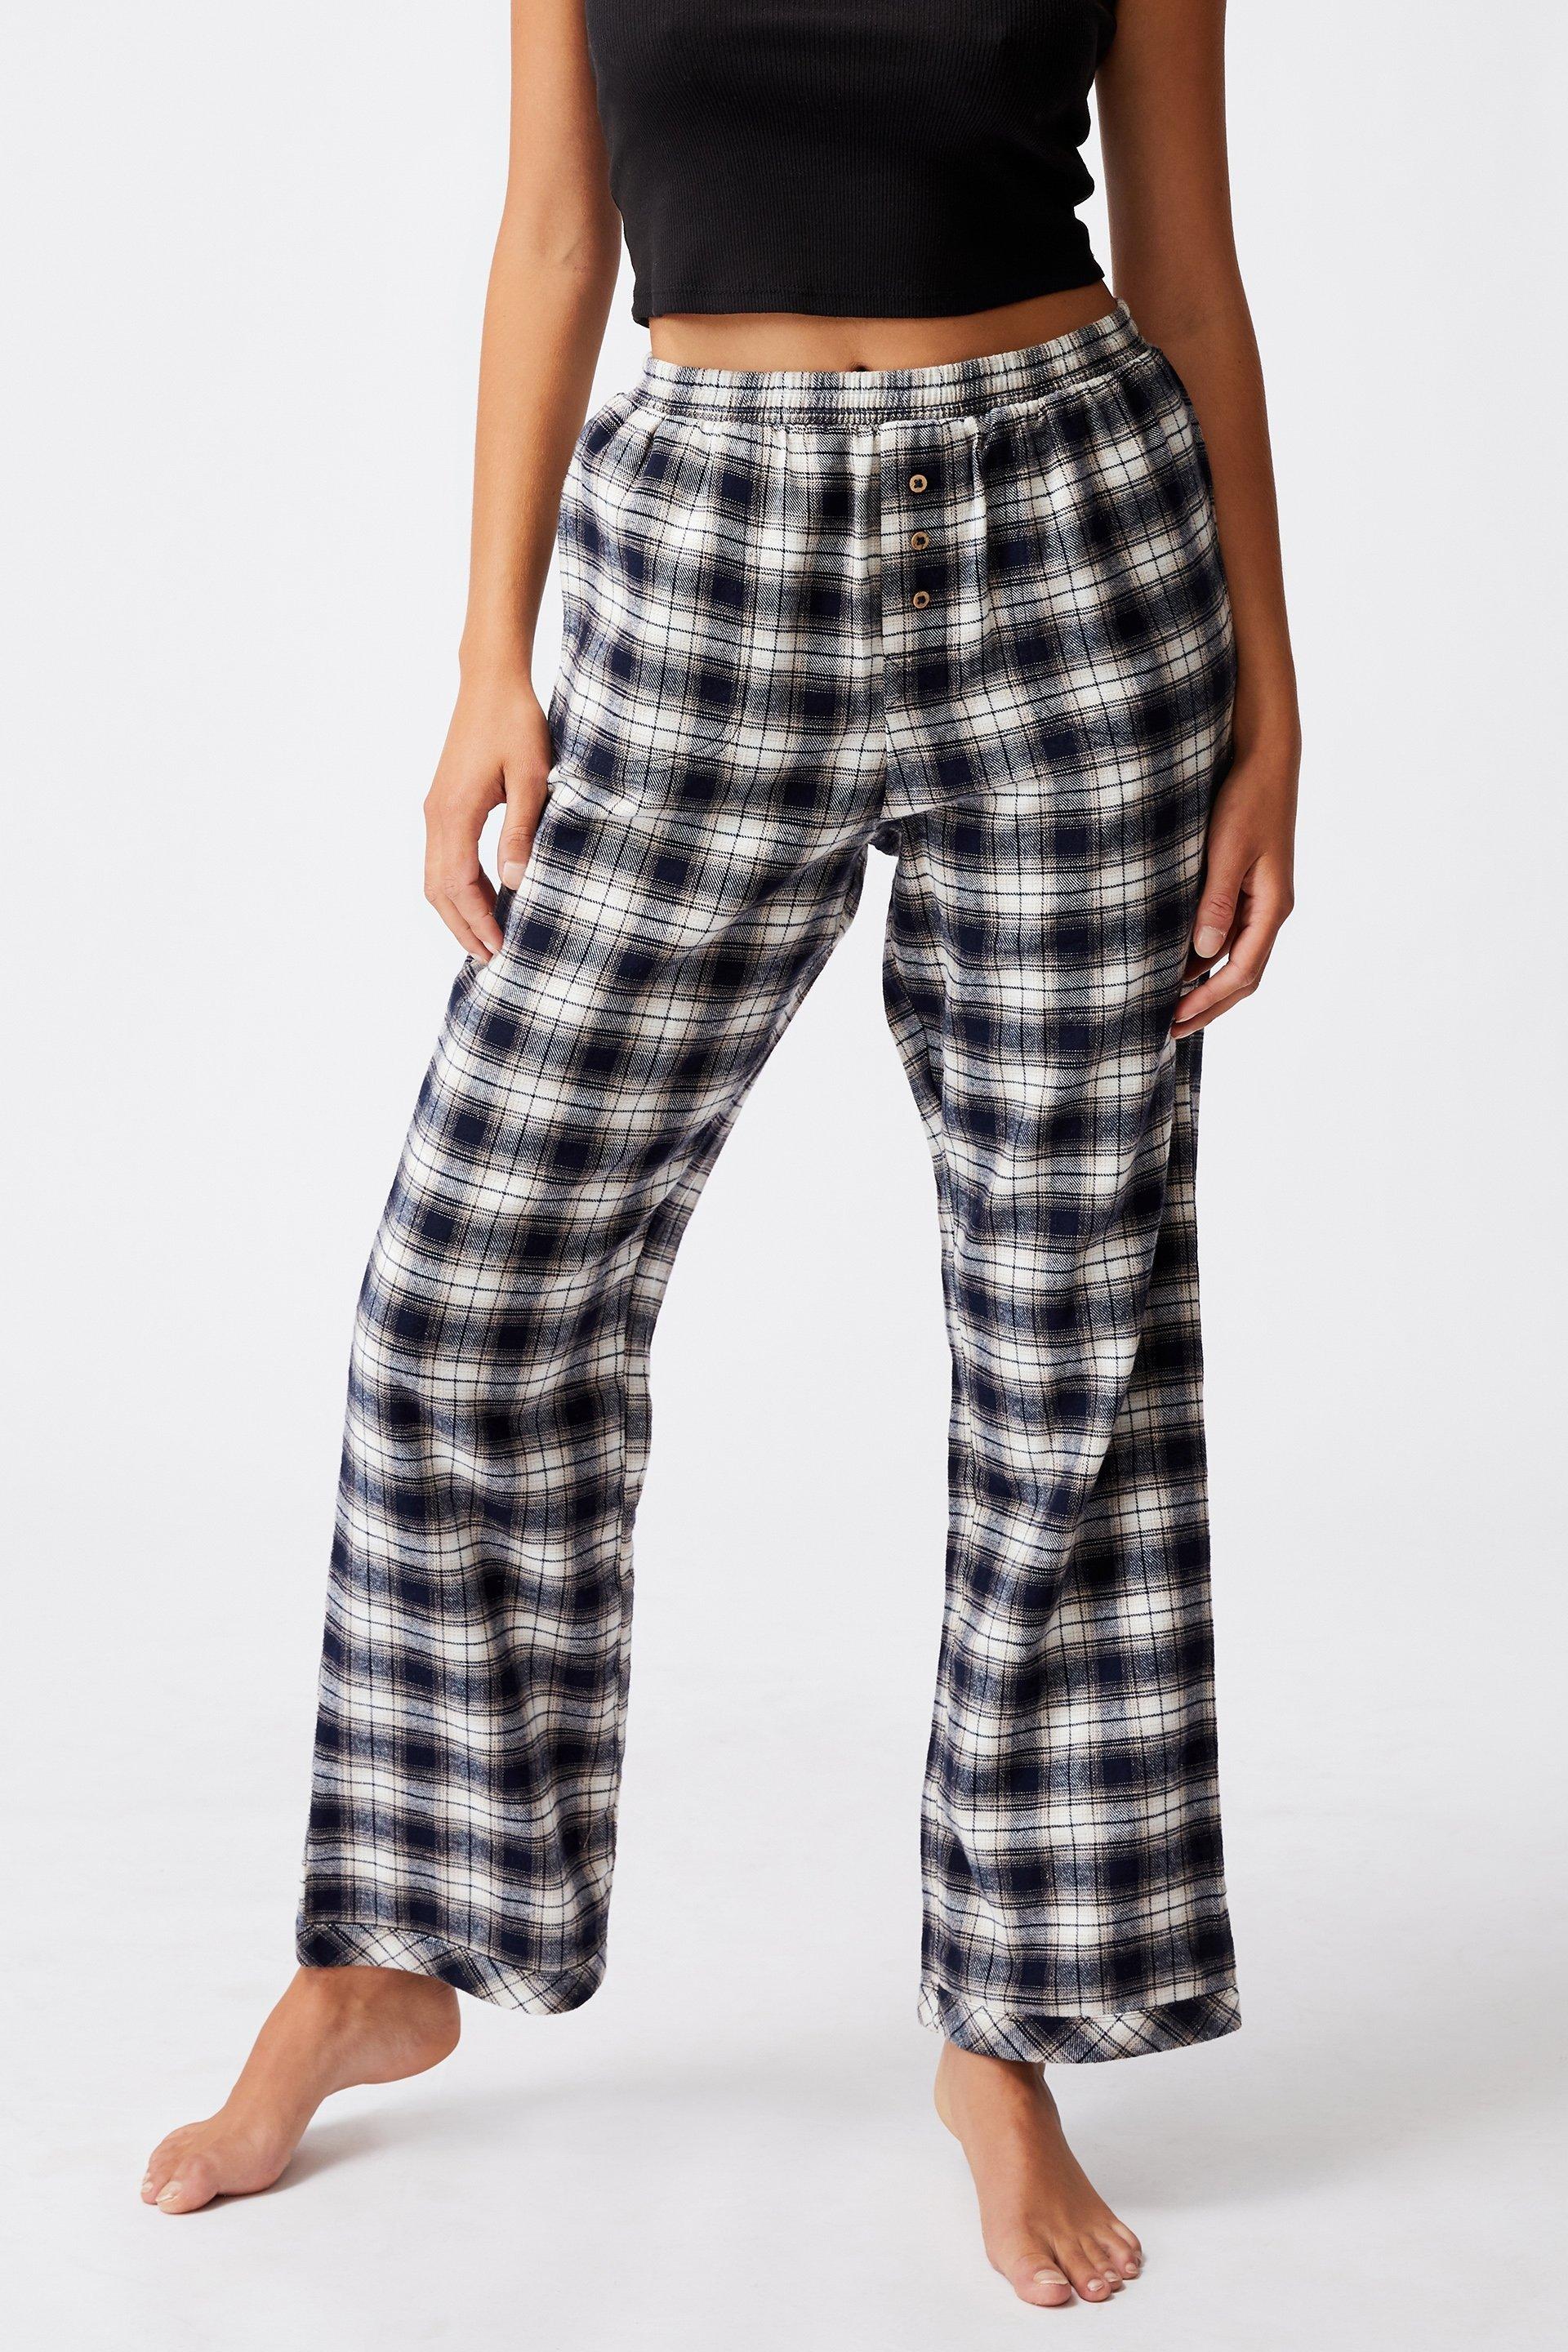 Warm flannel sleep pant - mini check navy Cotton On Sleepwear ...